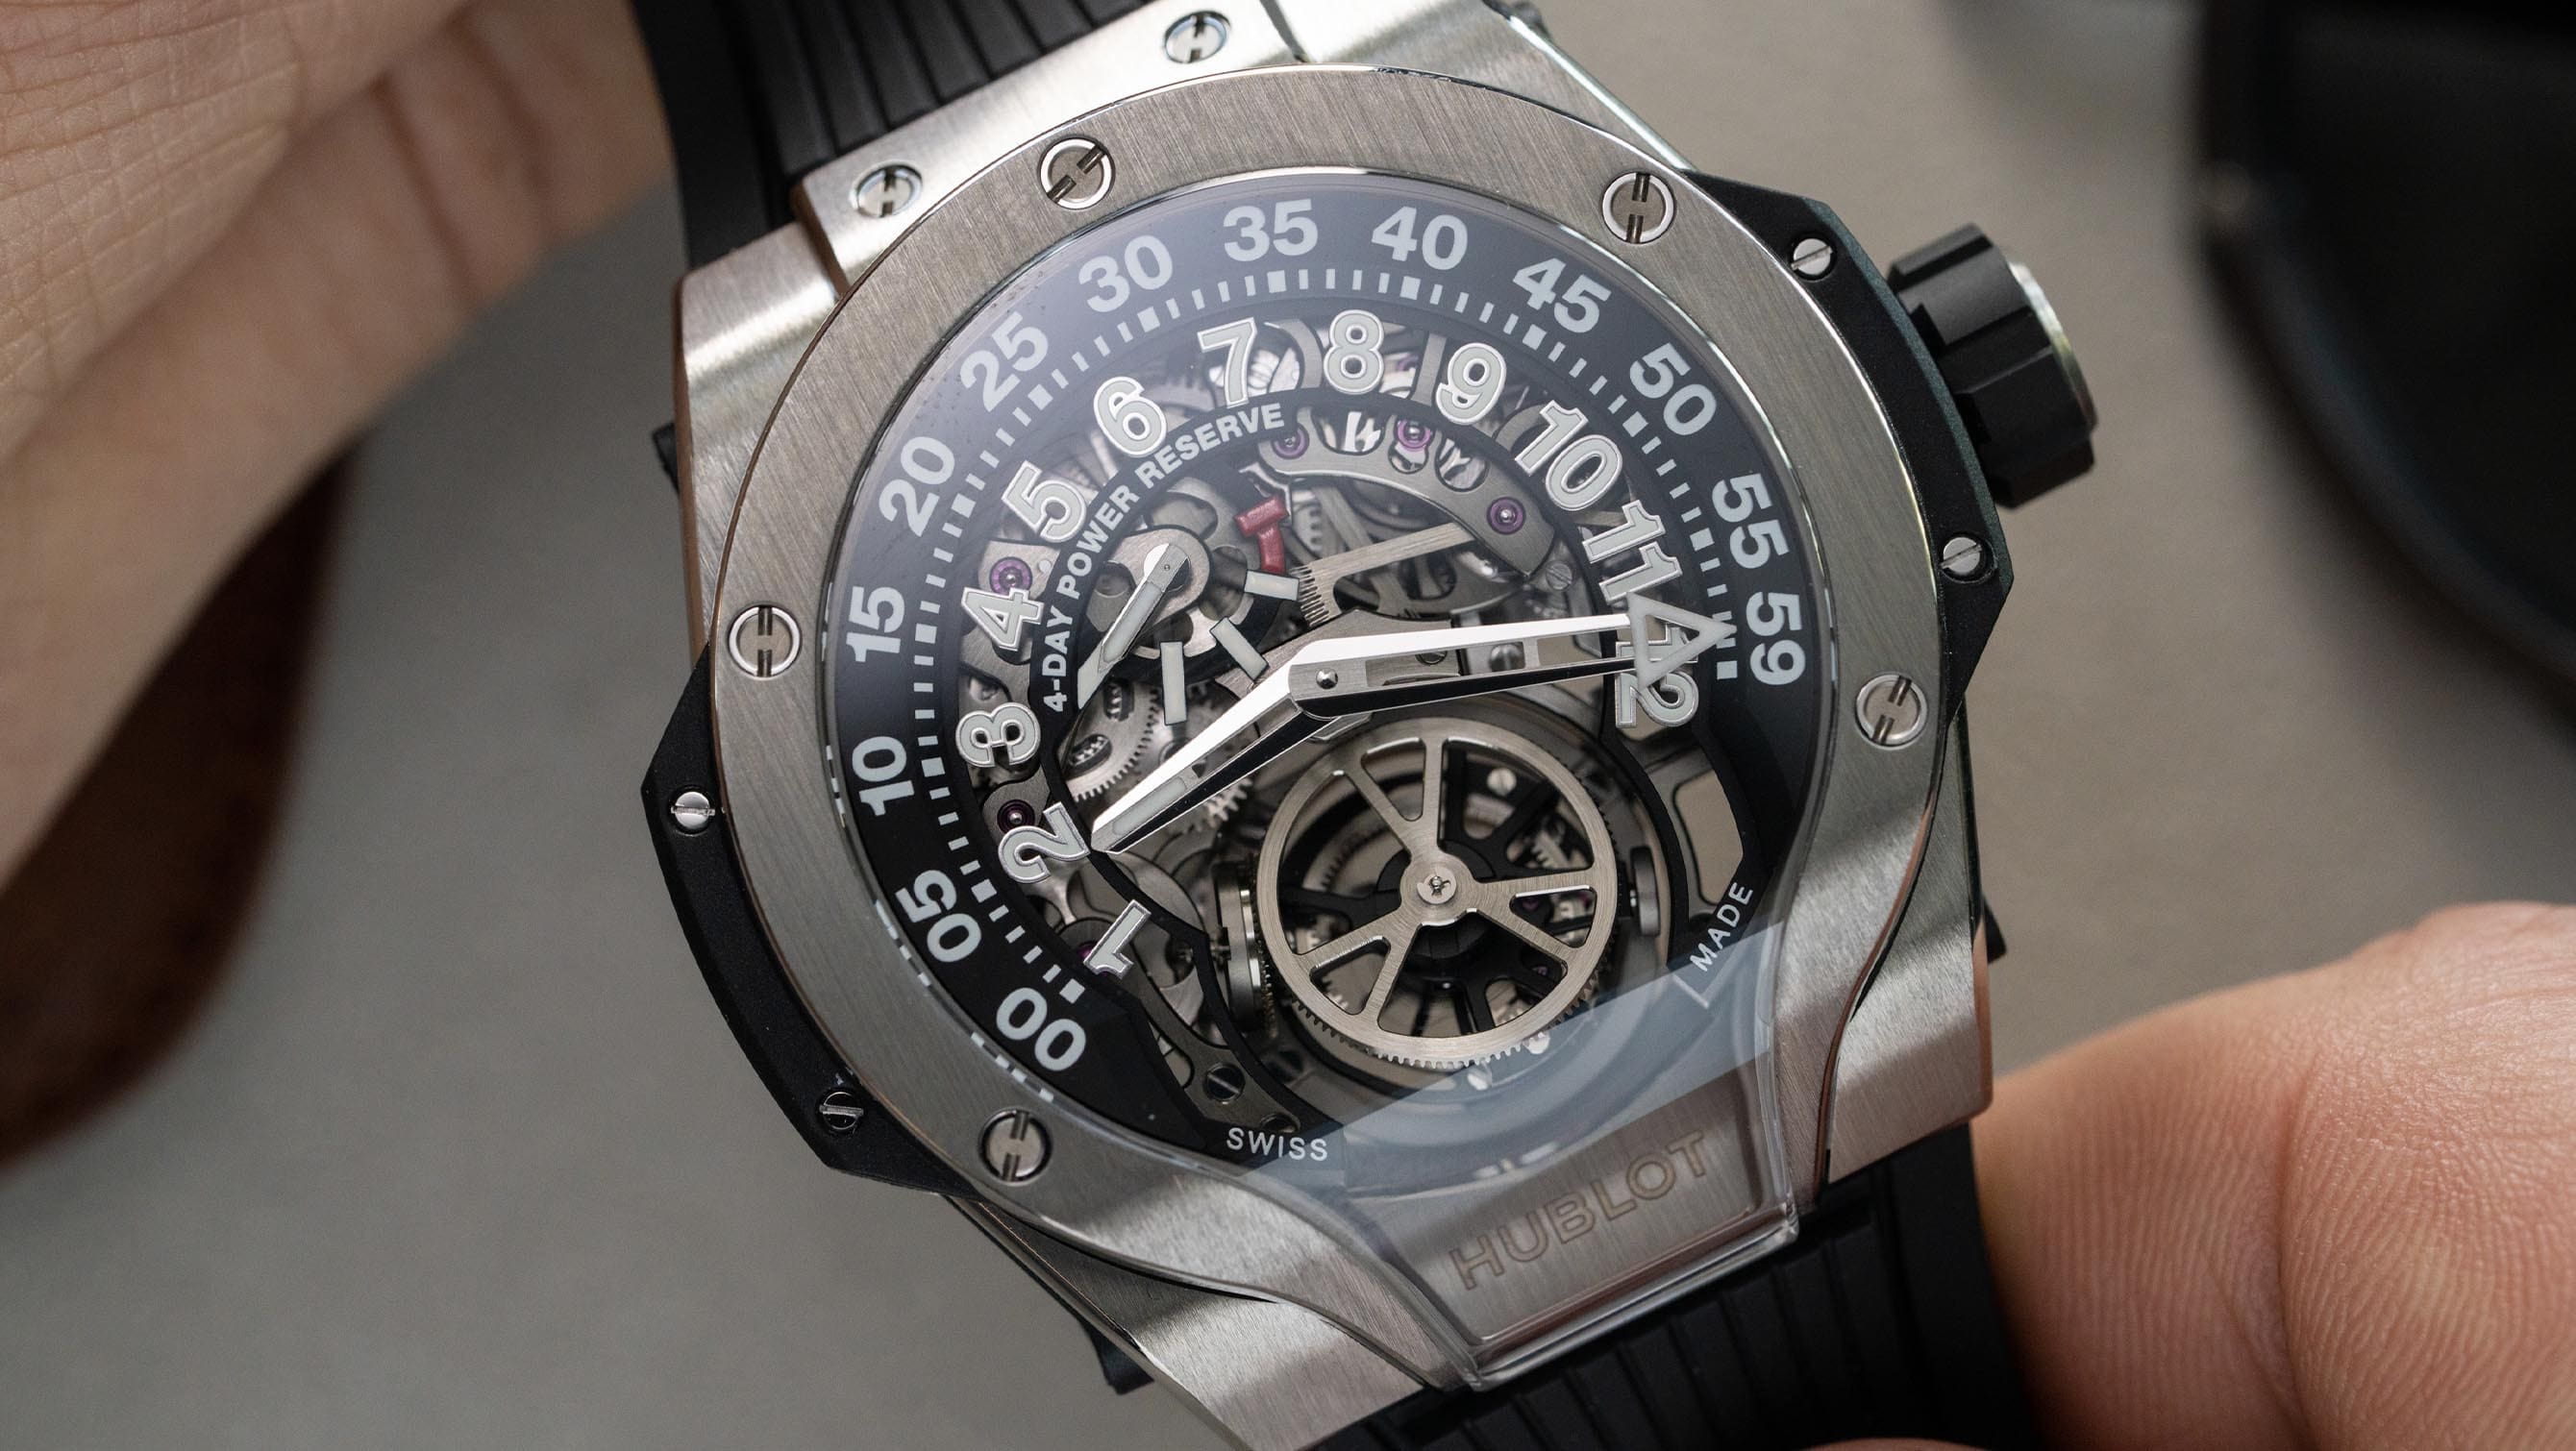 The Hublot MP-13 combines signature brand style and haute horlogerie tech